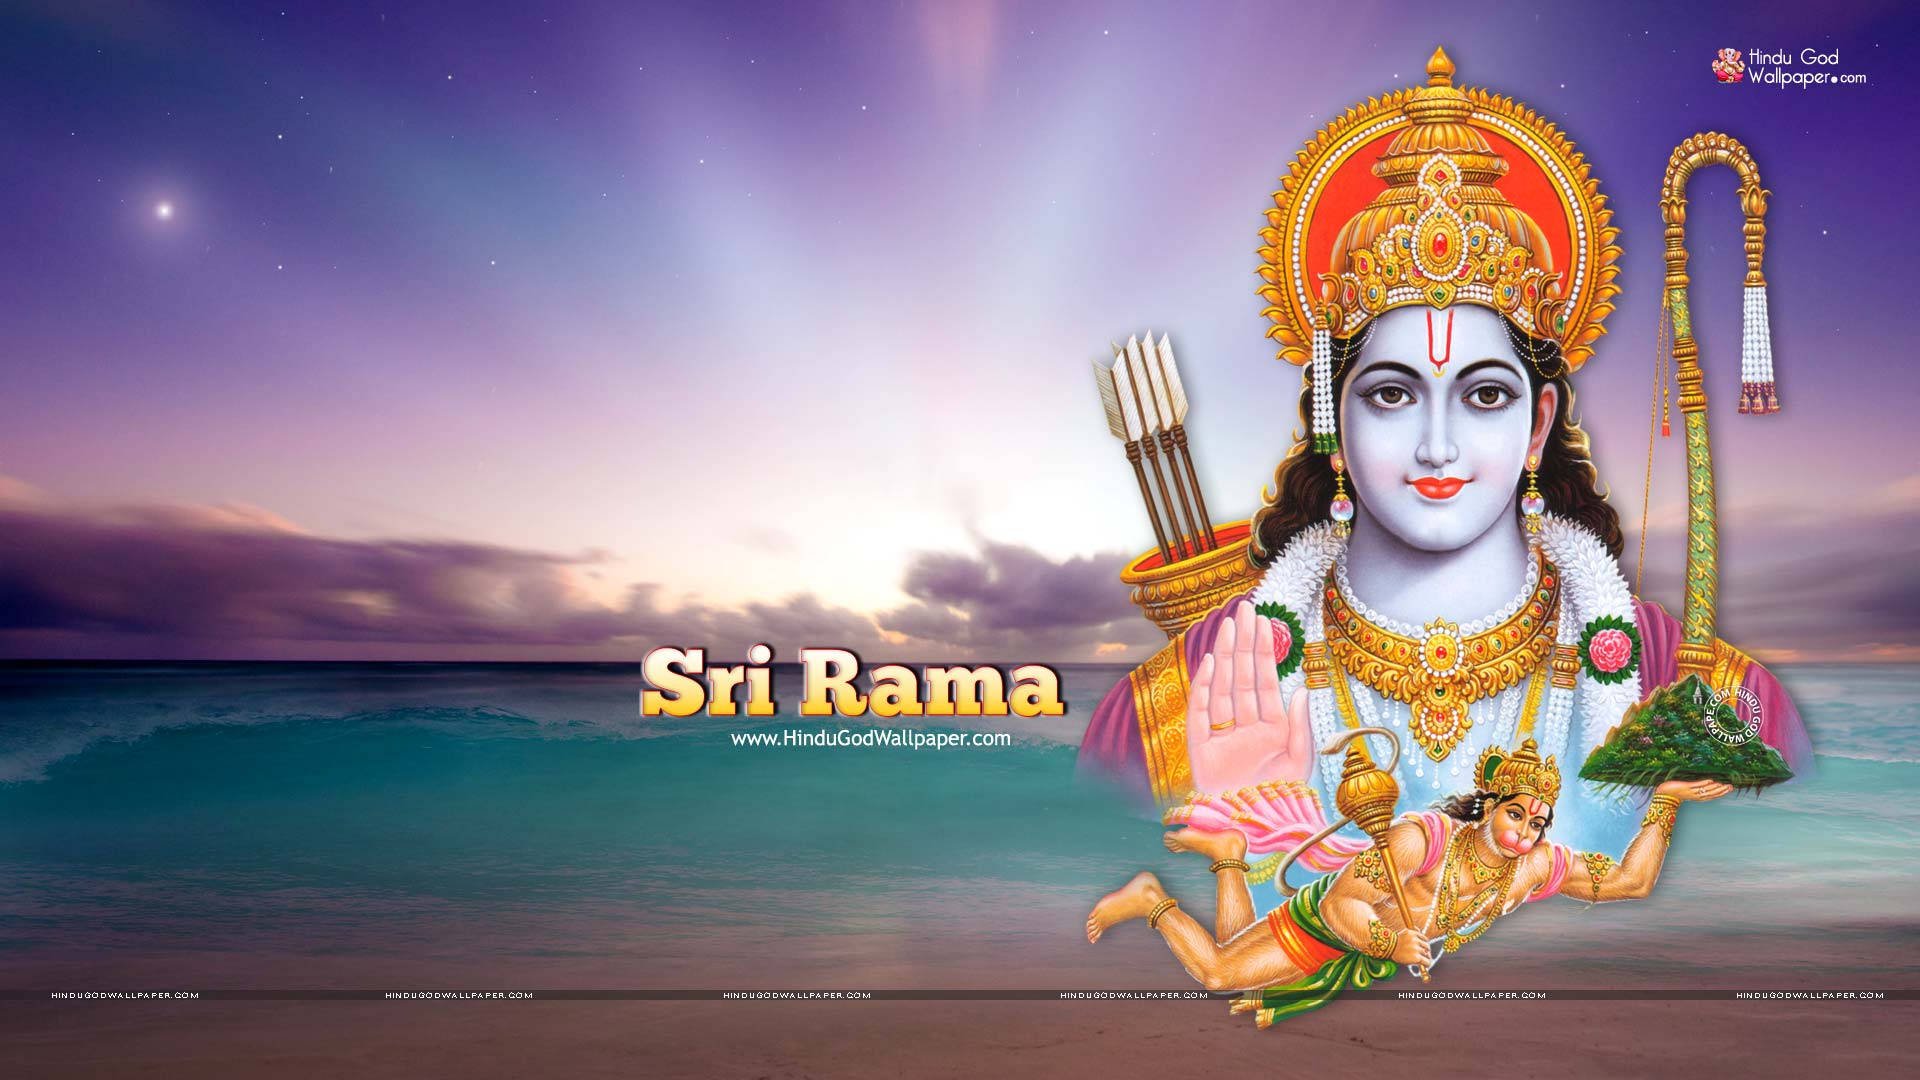 Free Ram Ji Wallpaper Downloads, Ram Ji Wallpaper for FREE